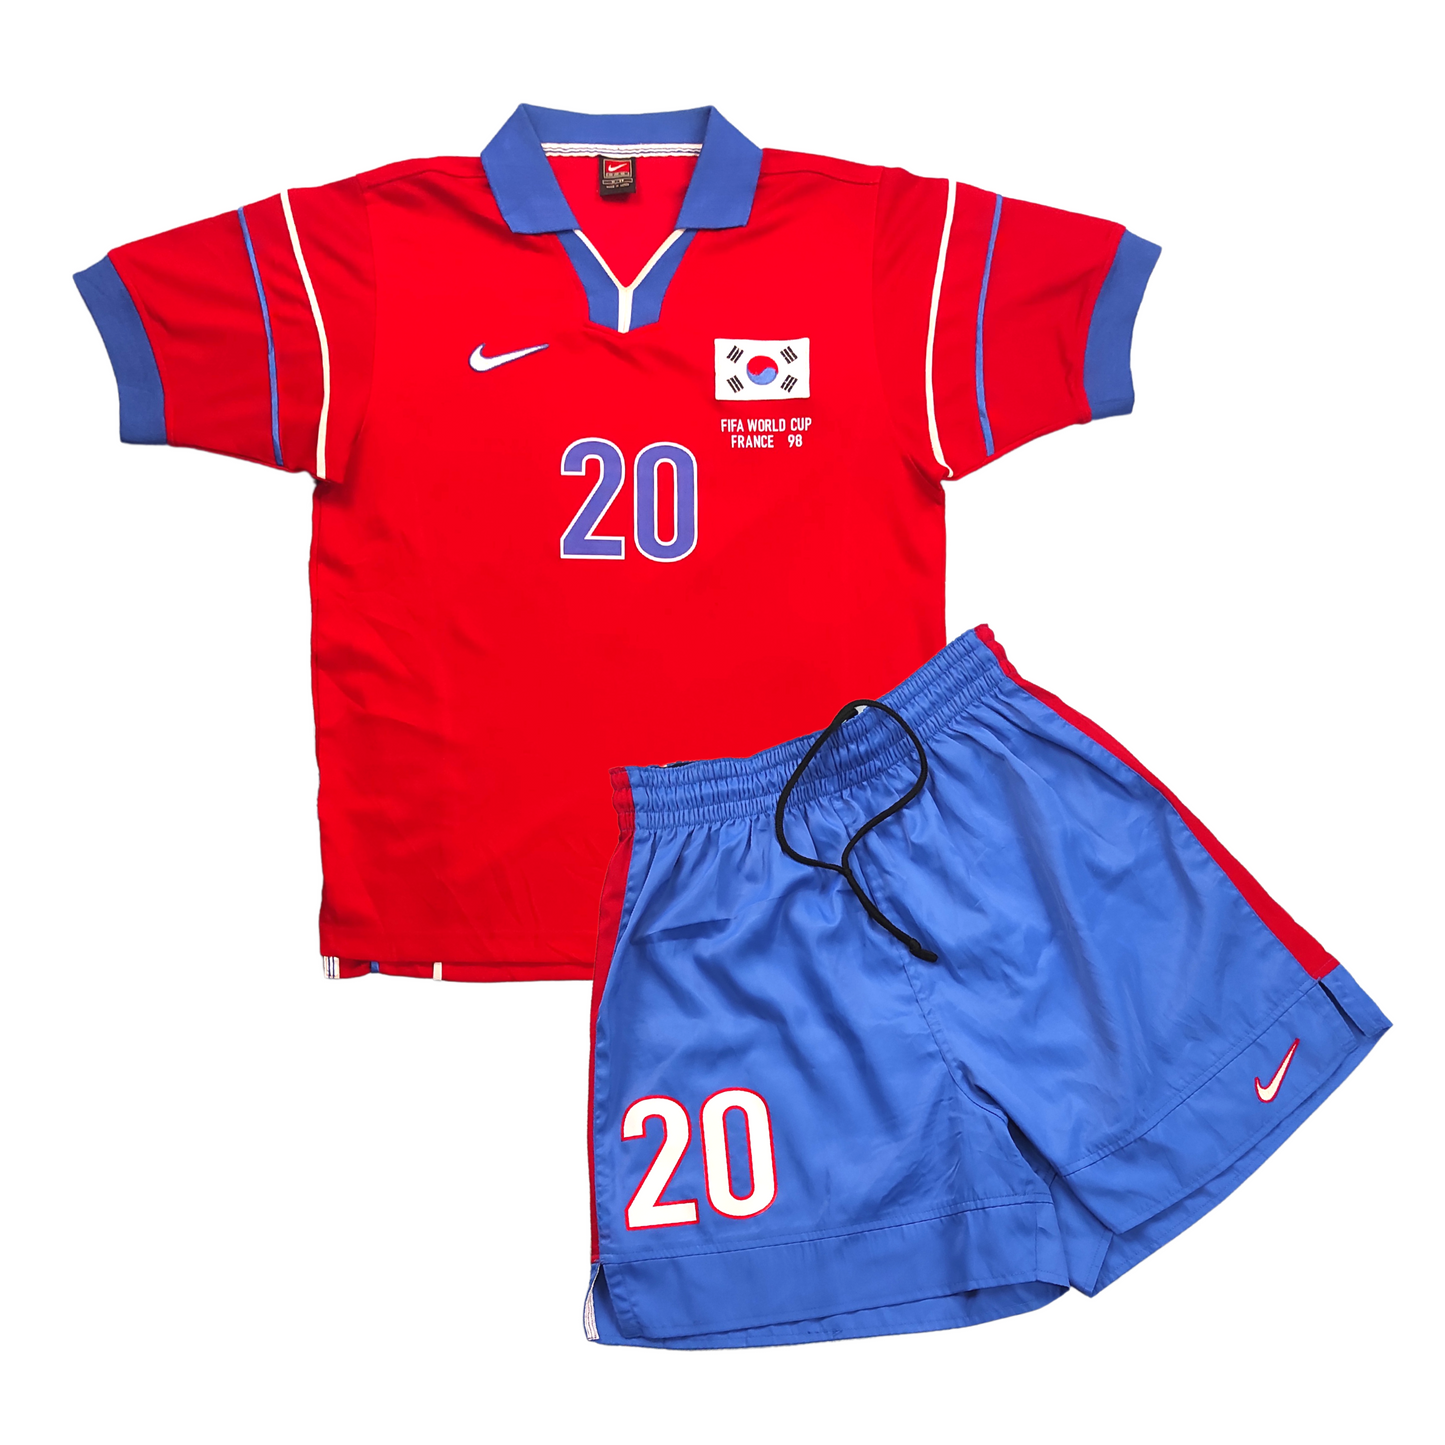 South Korea Home Shirt w/Shorts 1998-2000 M B Hong (M)